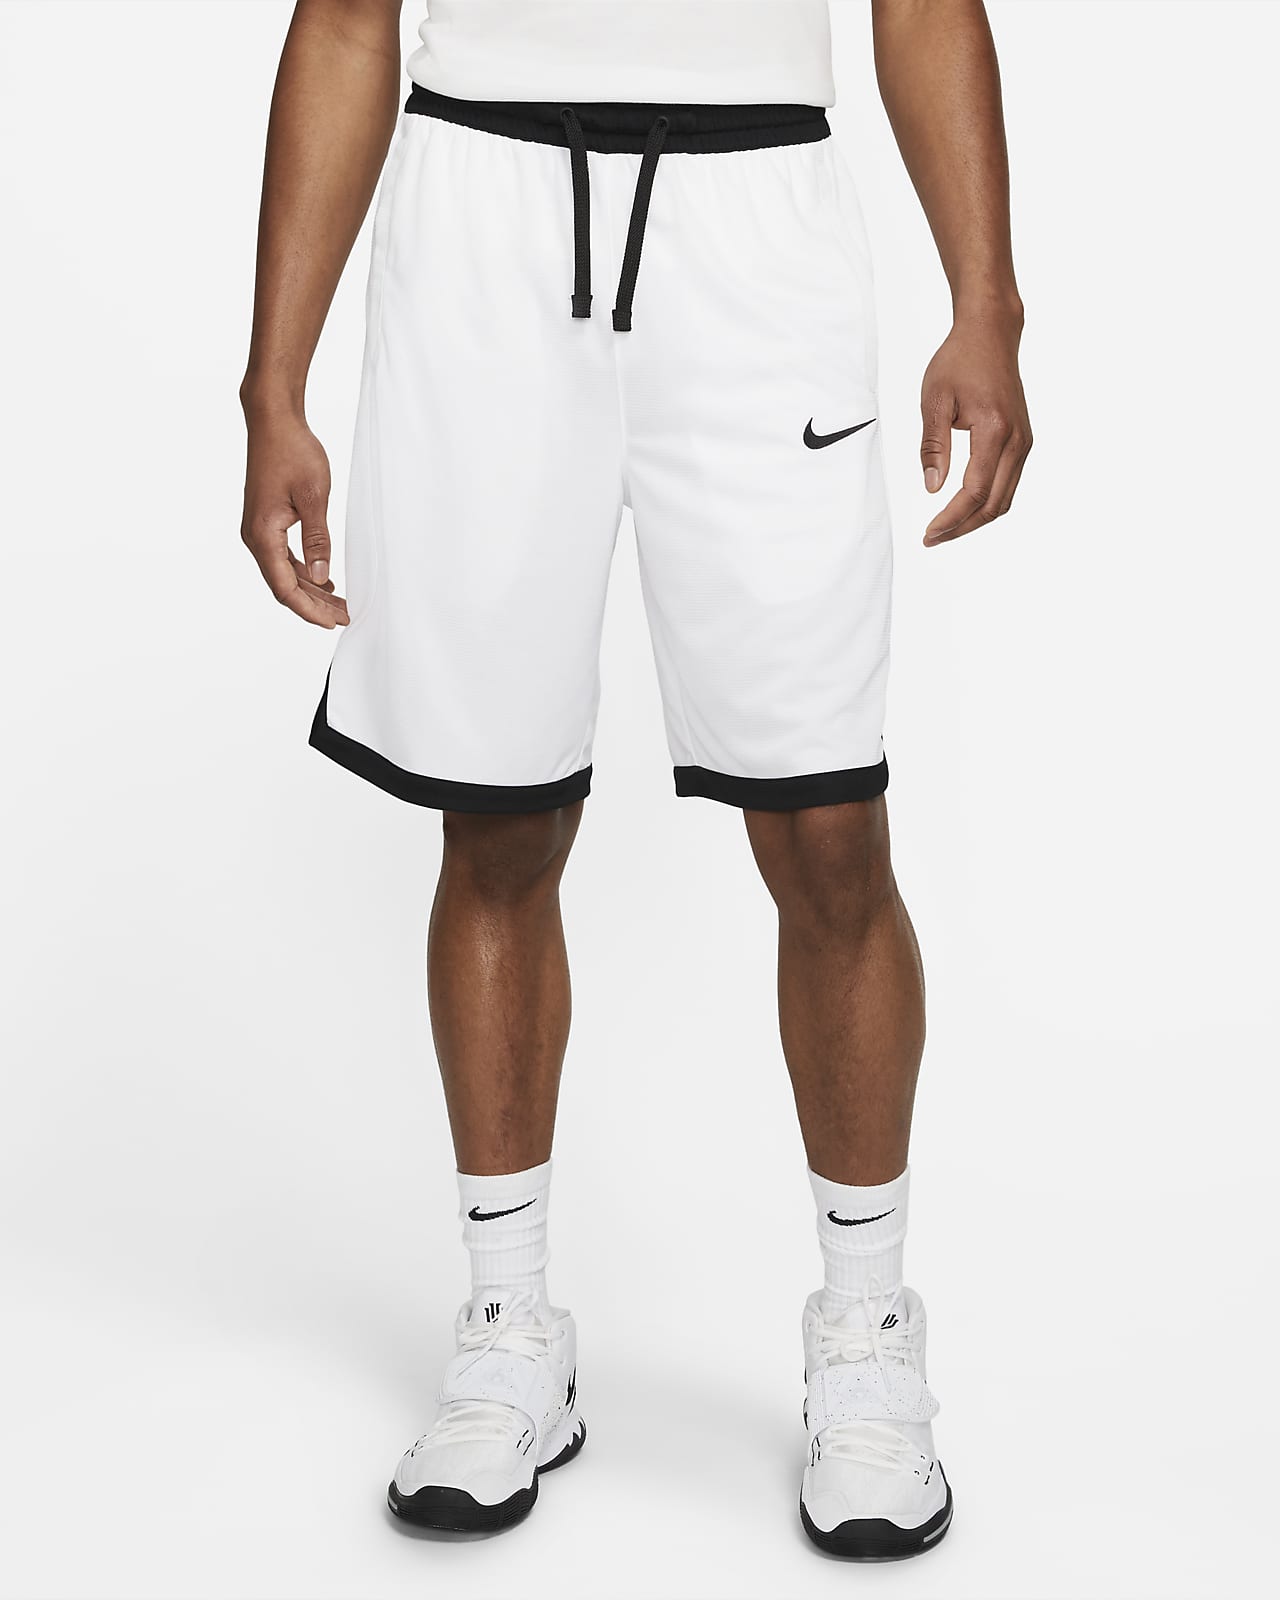 white mens basketball shorts